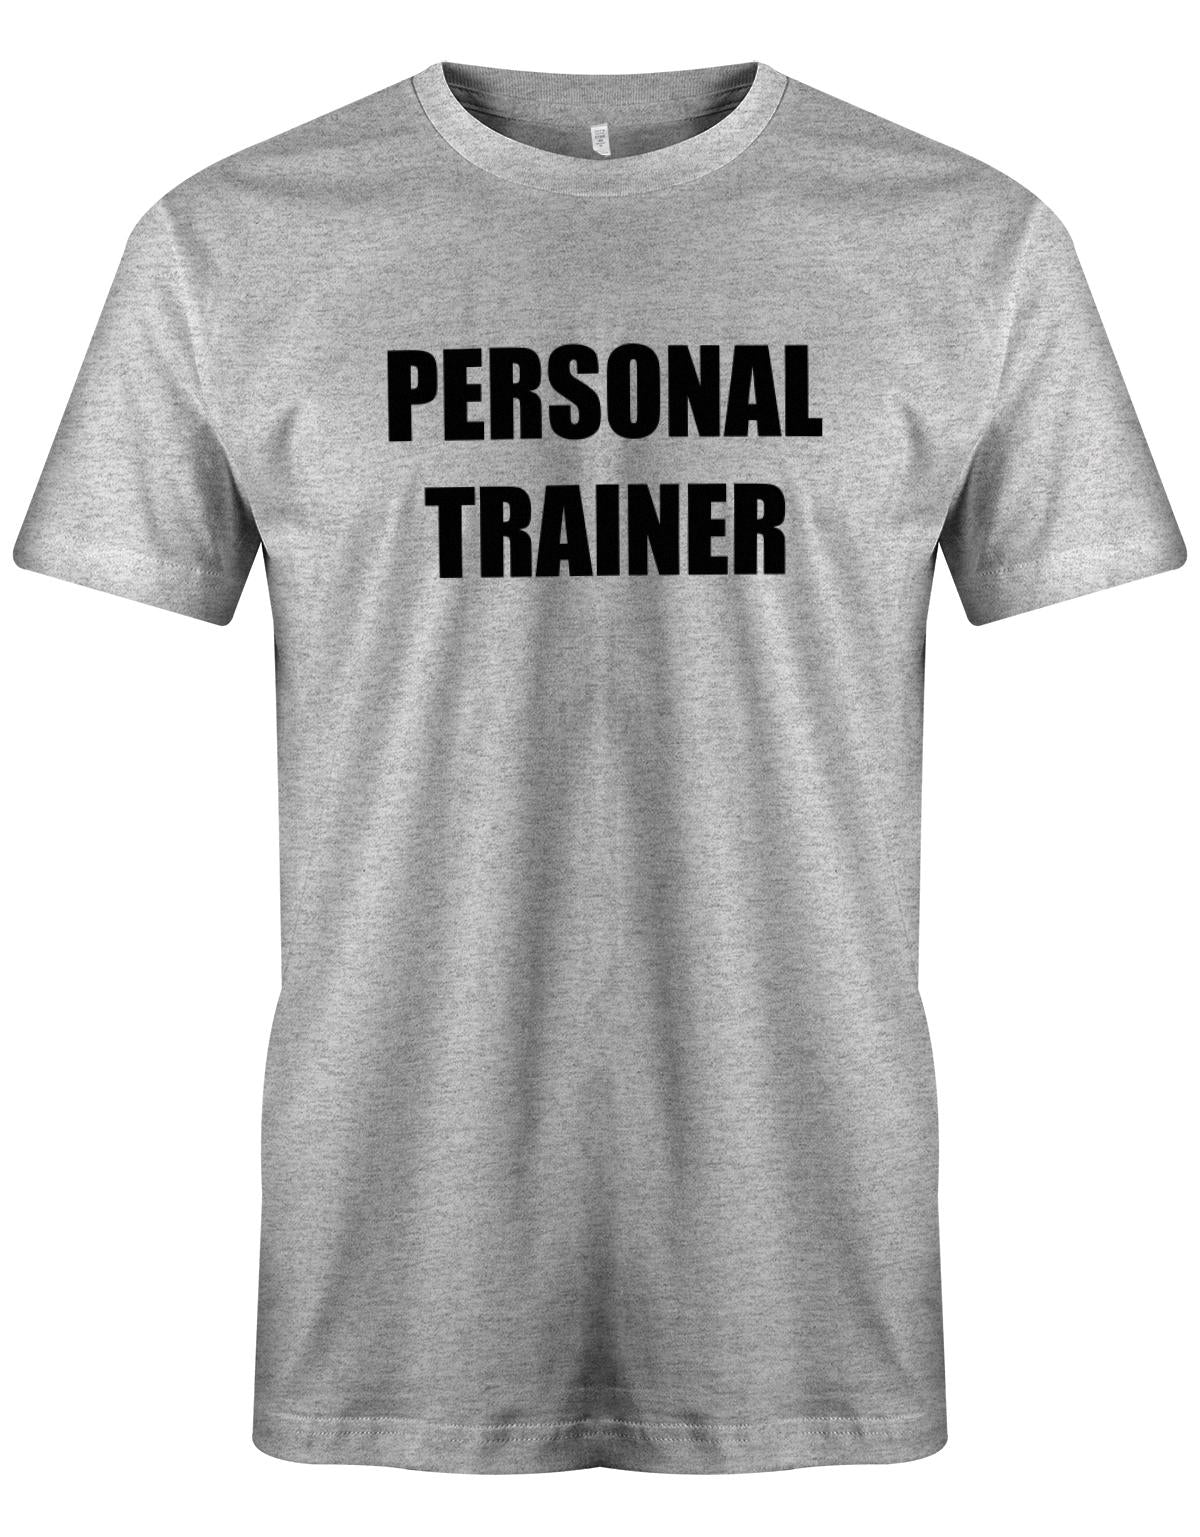 Personal-Trainer-Herren-Shirt-Grau